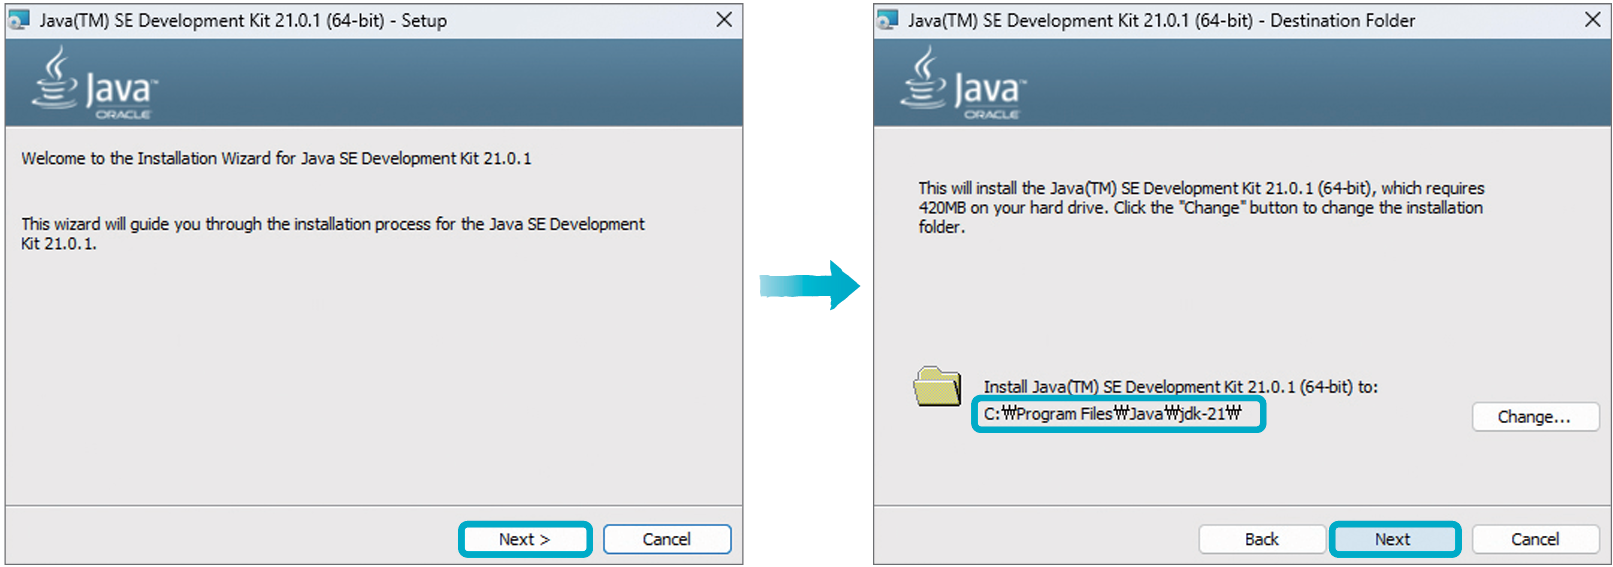 Java(TM) SE Development Kit 21.0.1